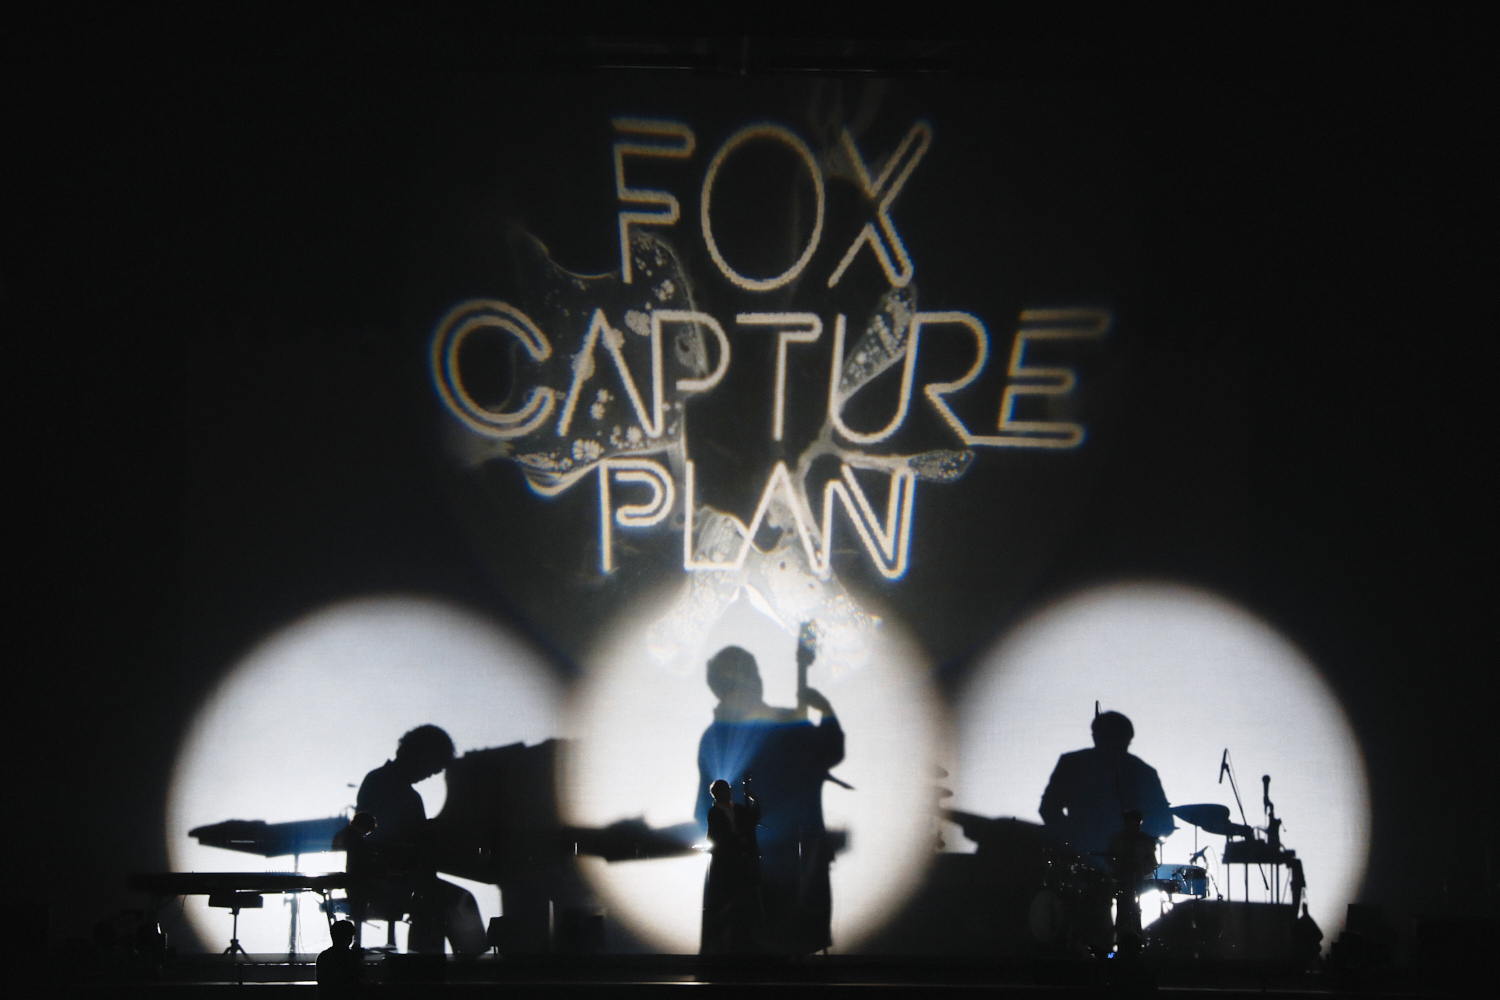 fox capture plan